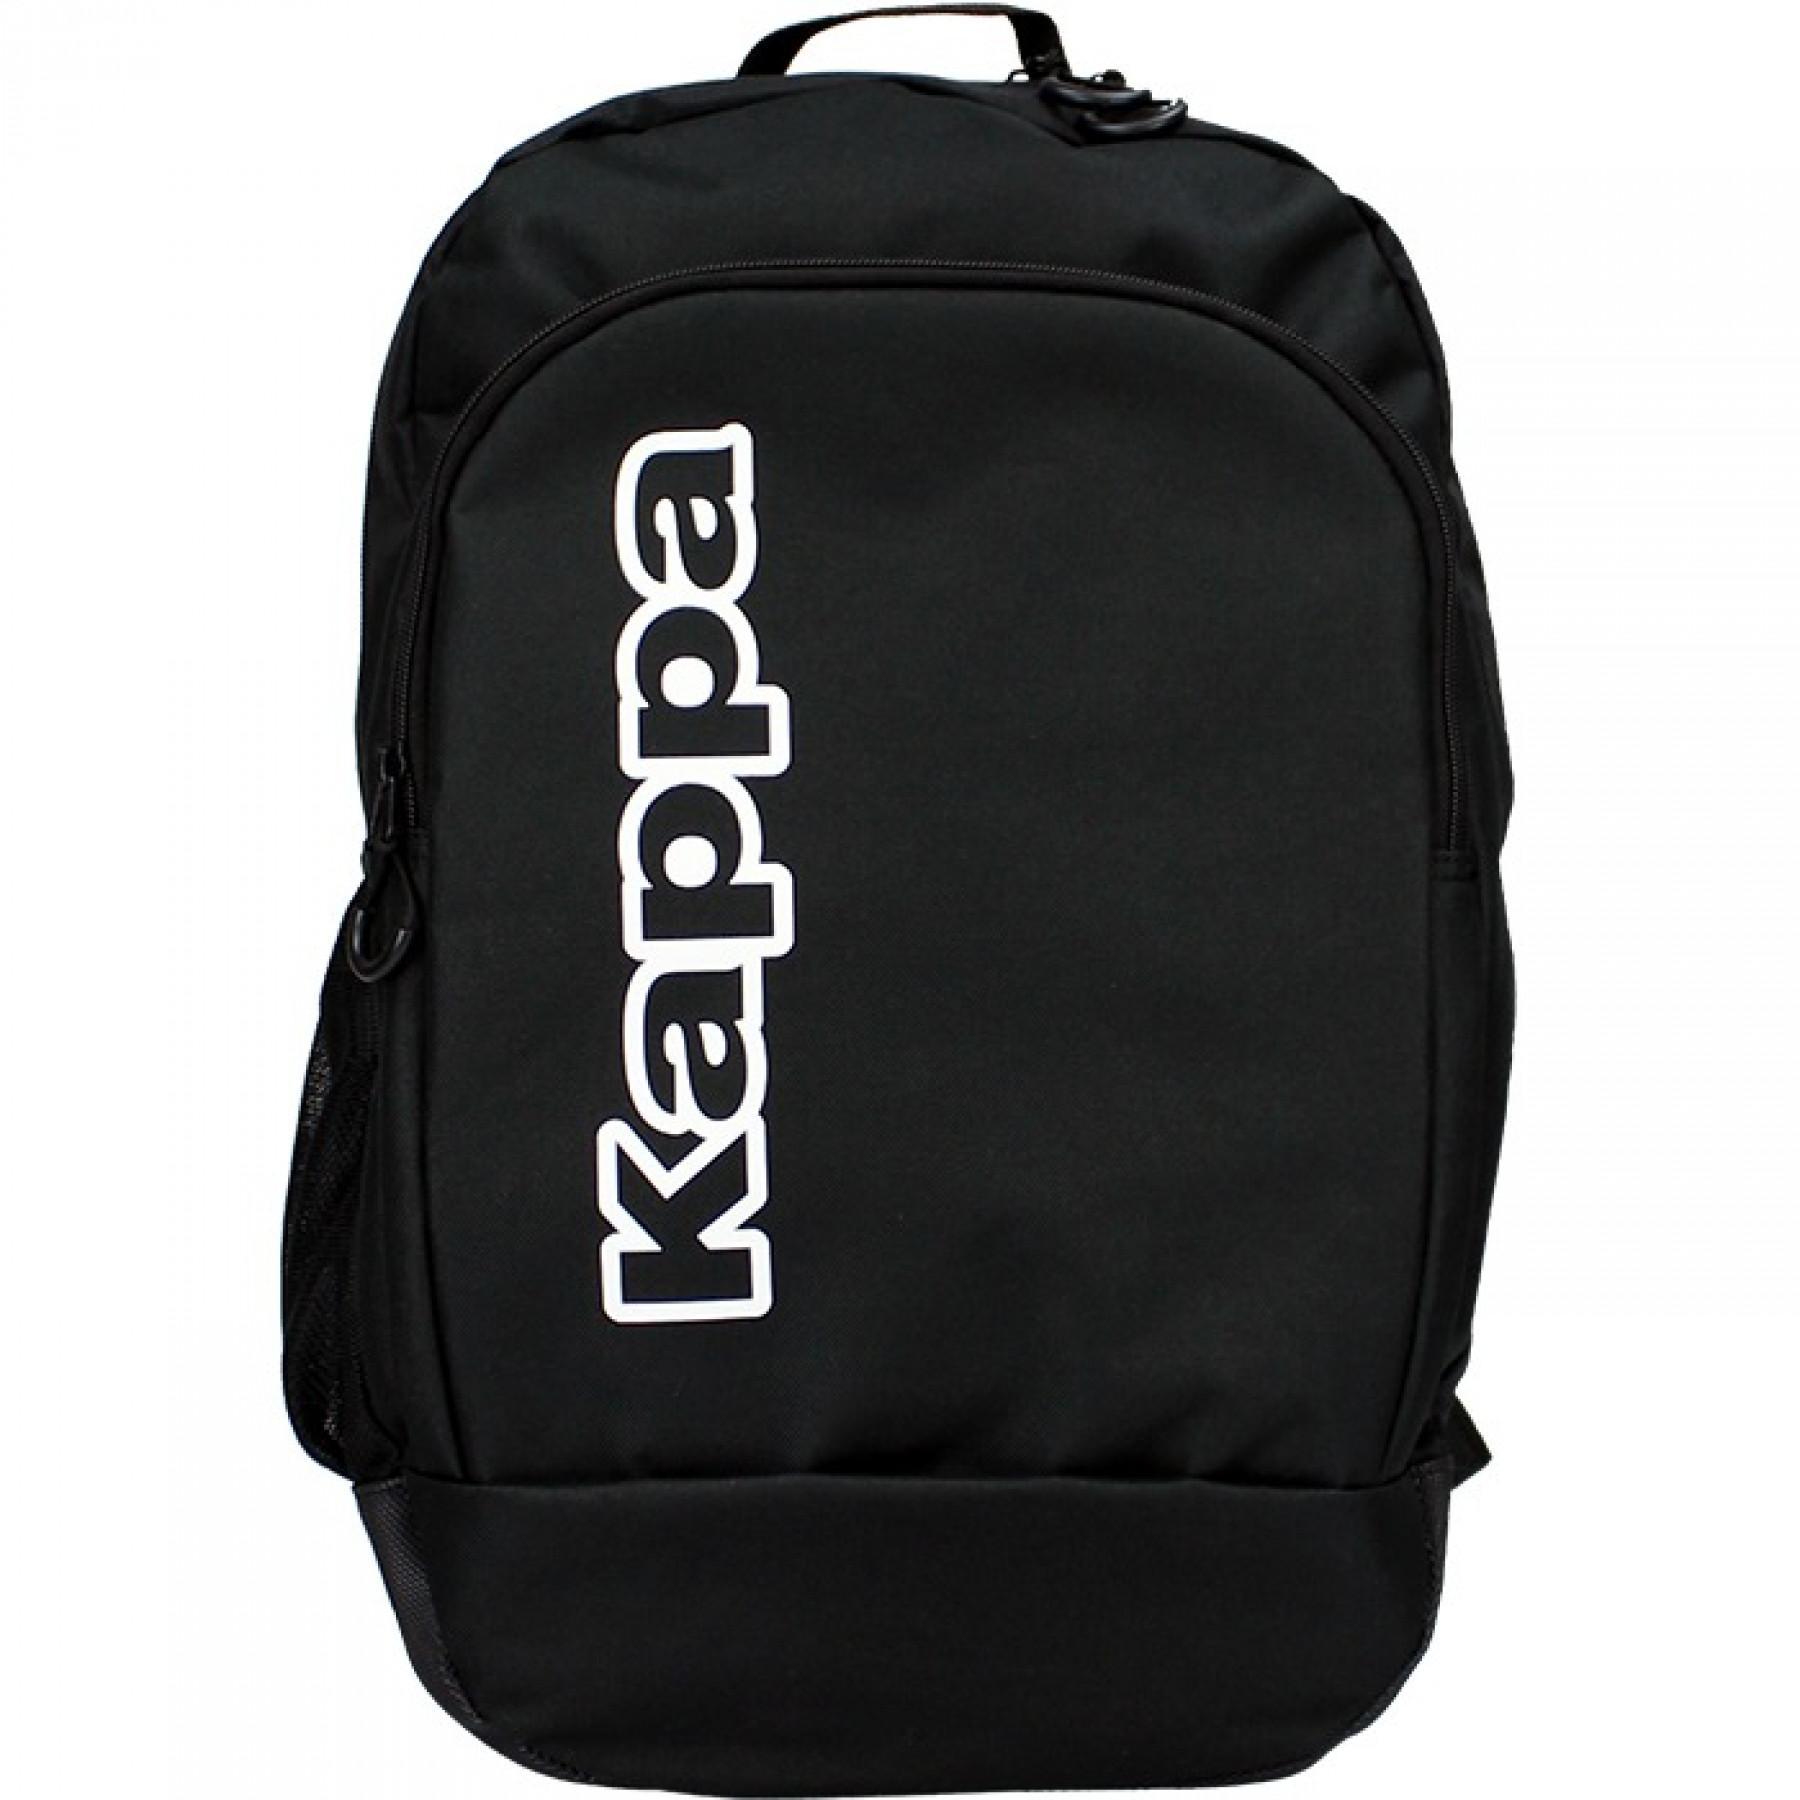 Kappa Kappa Gamma Tote Bag | Sorority Specialties